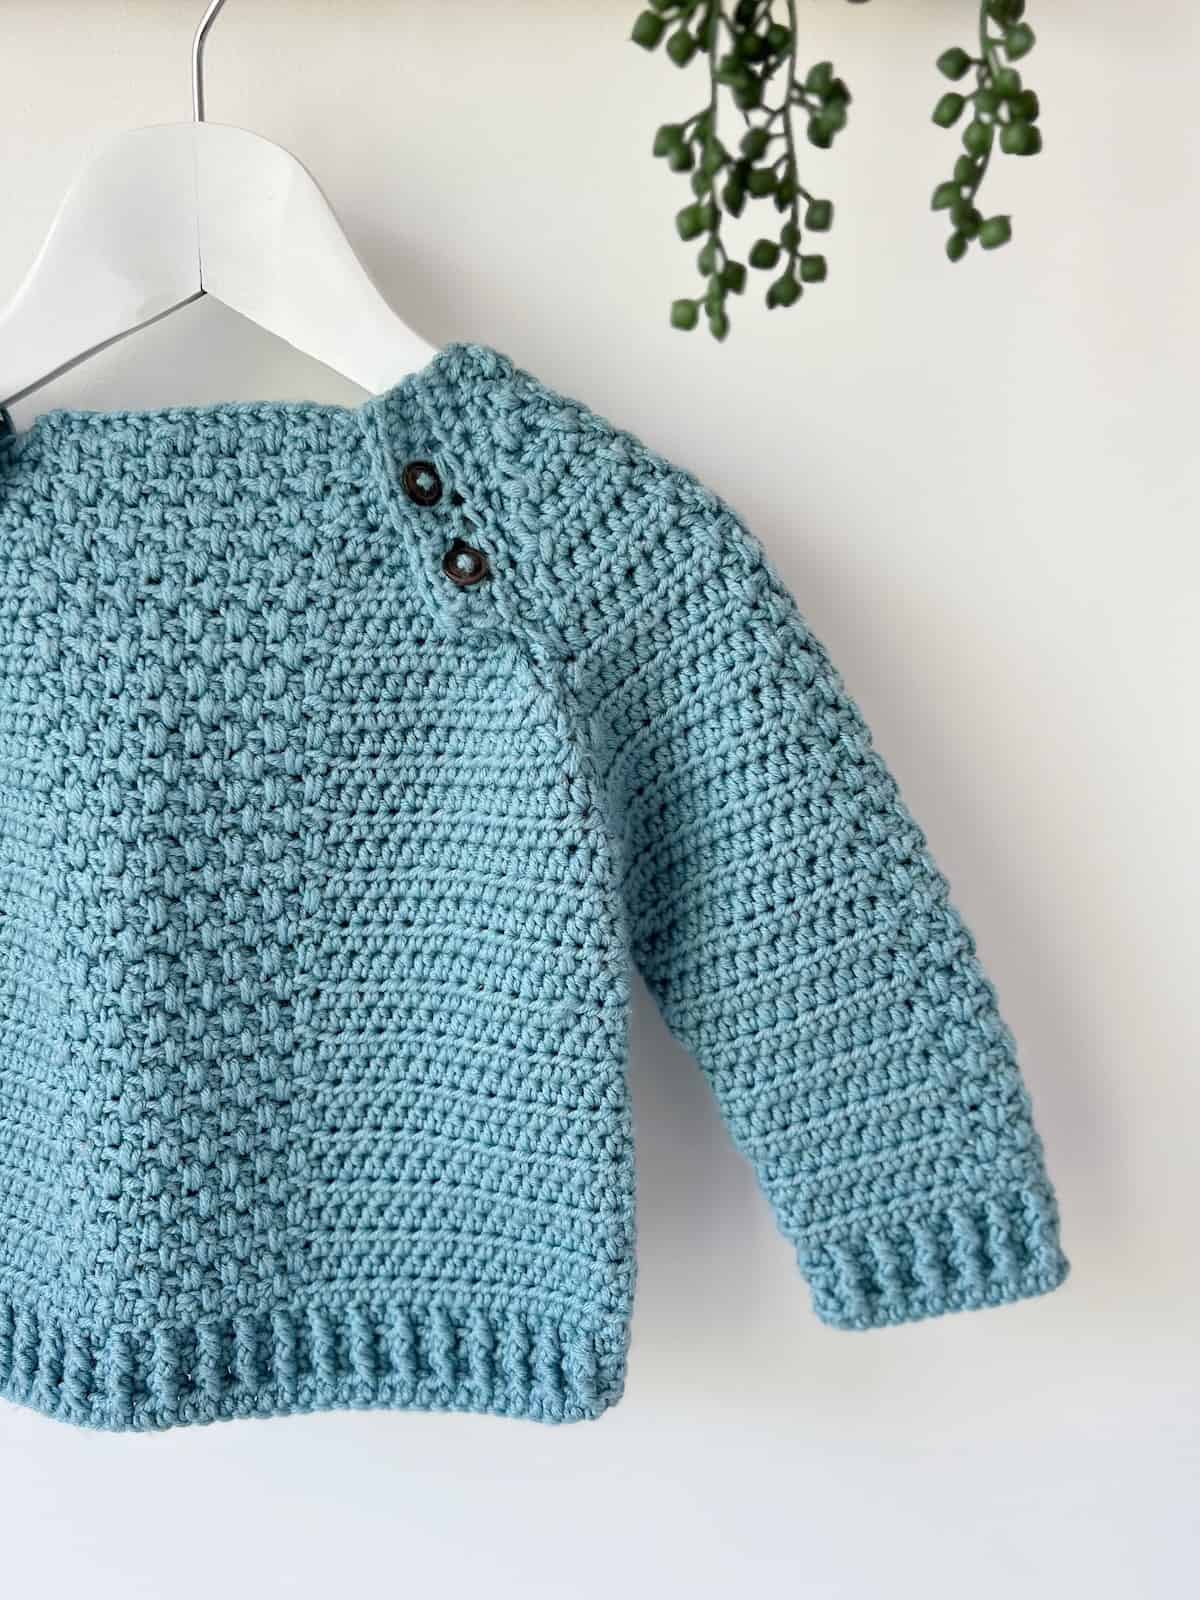 Crochet Napkin Ring Pattern - Modern and Easy